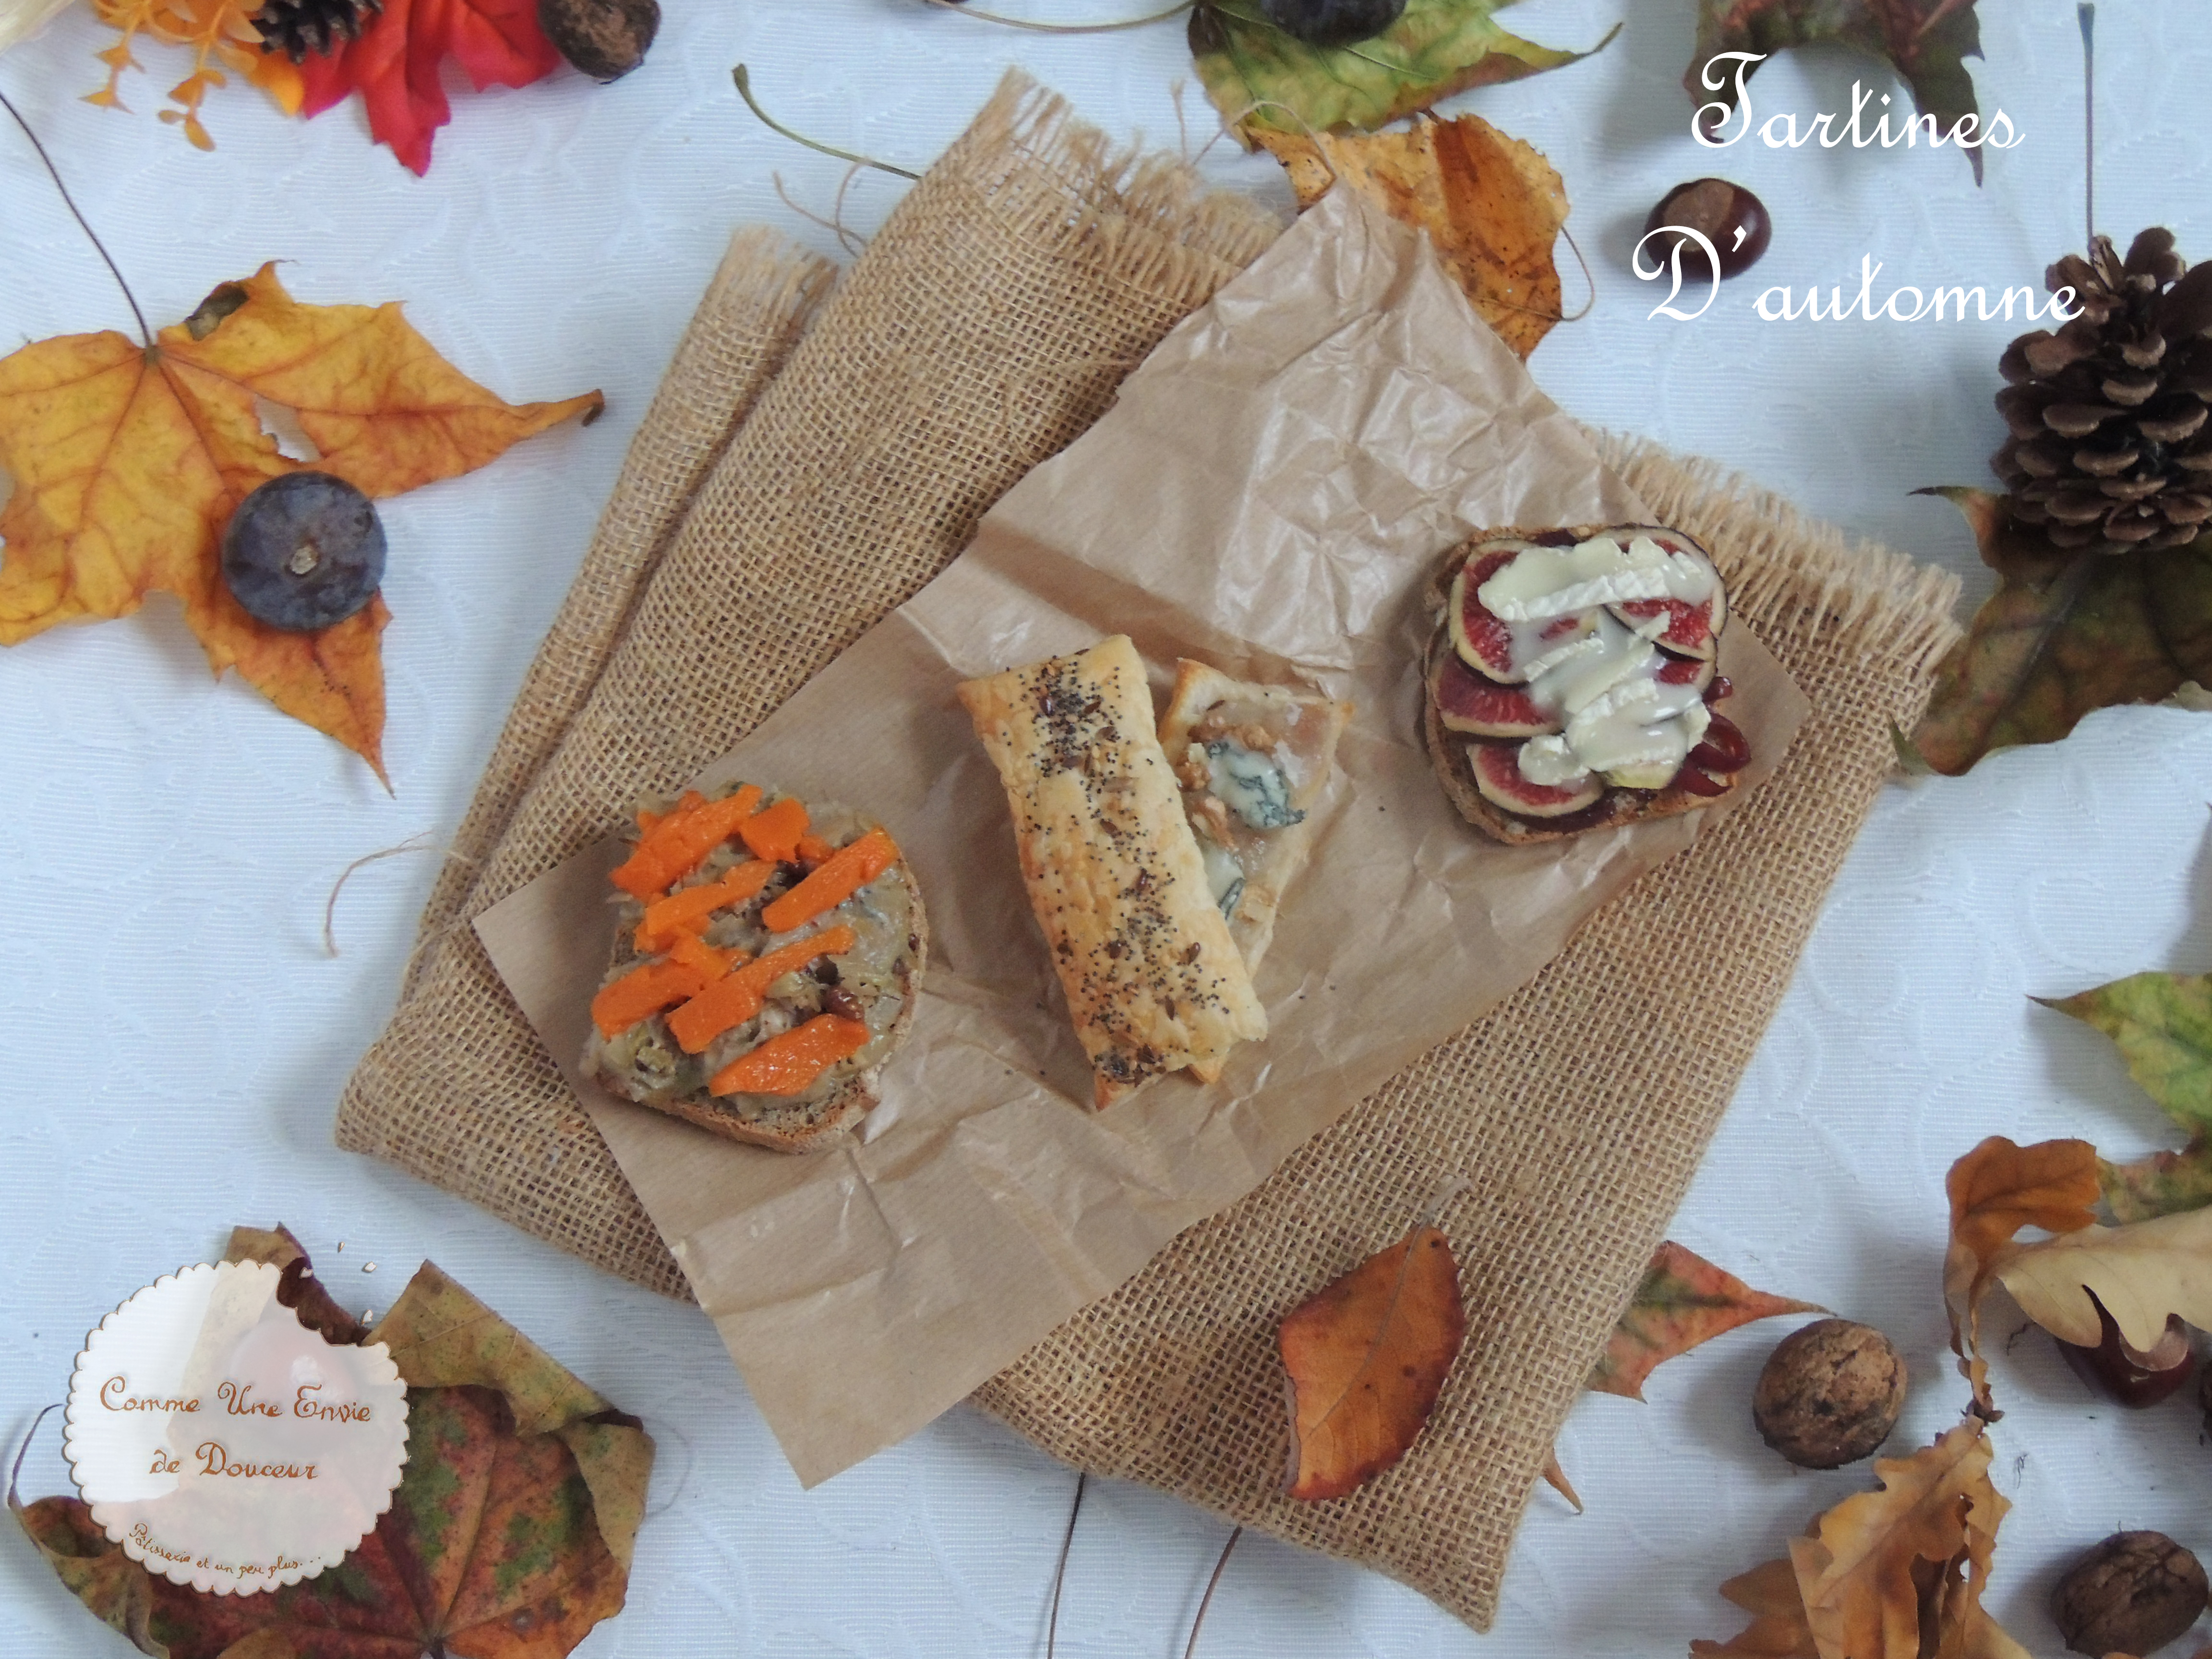 Foodista Challenge #34 Trio de tartines automnales – Fall’s flavors toasts